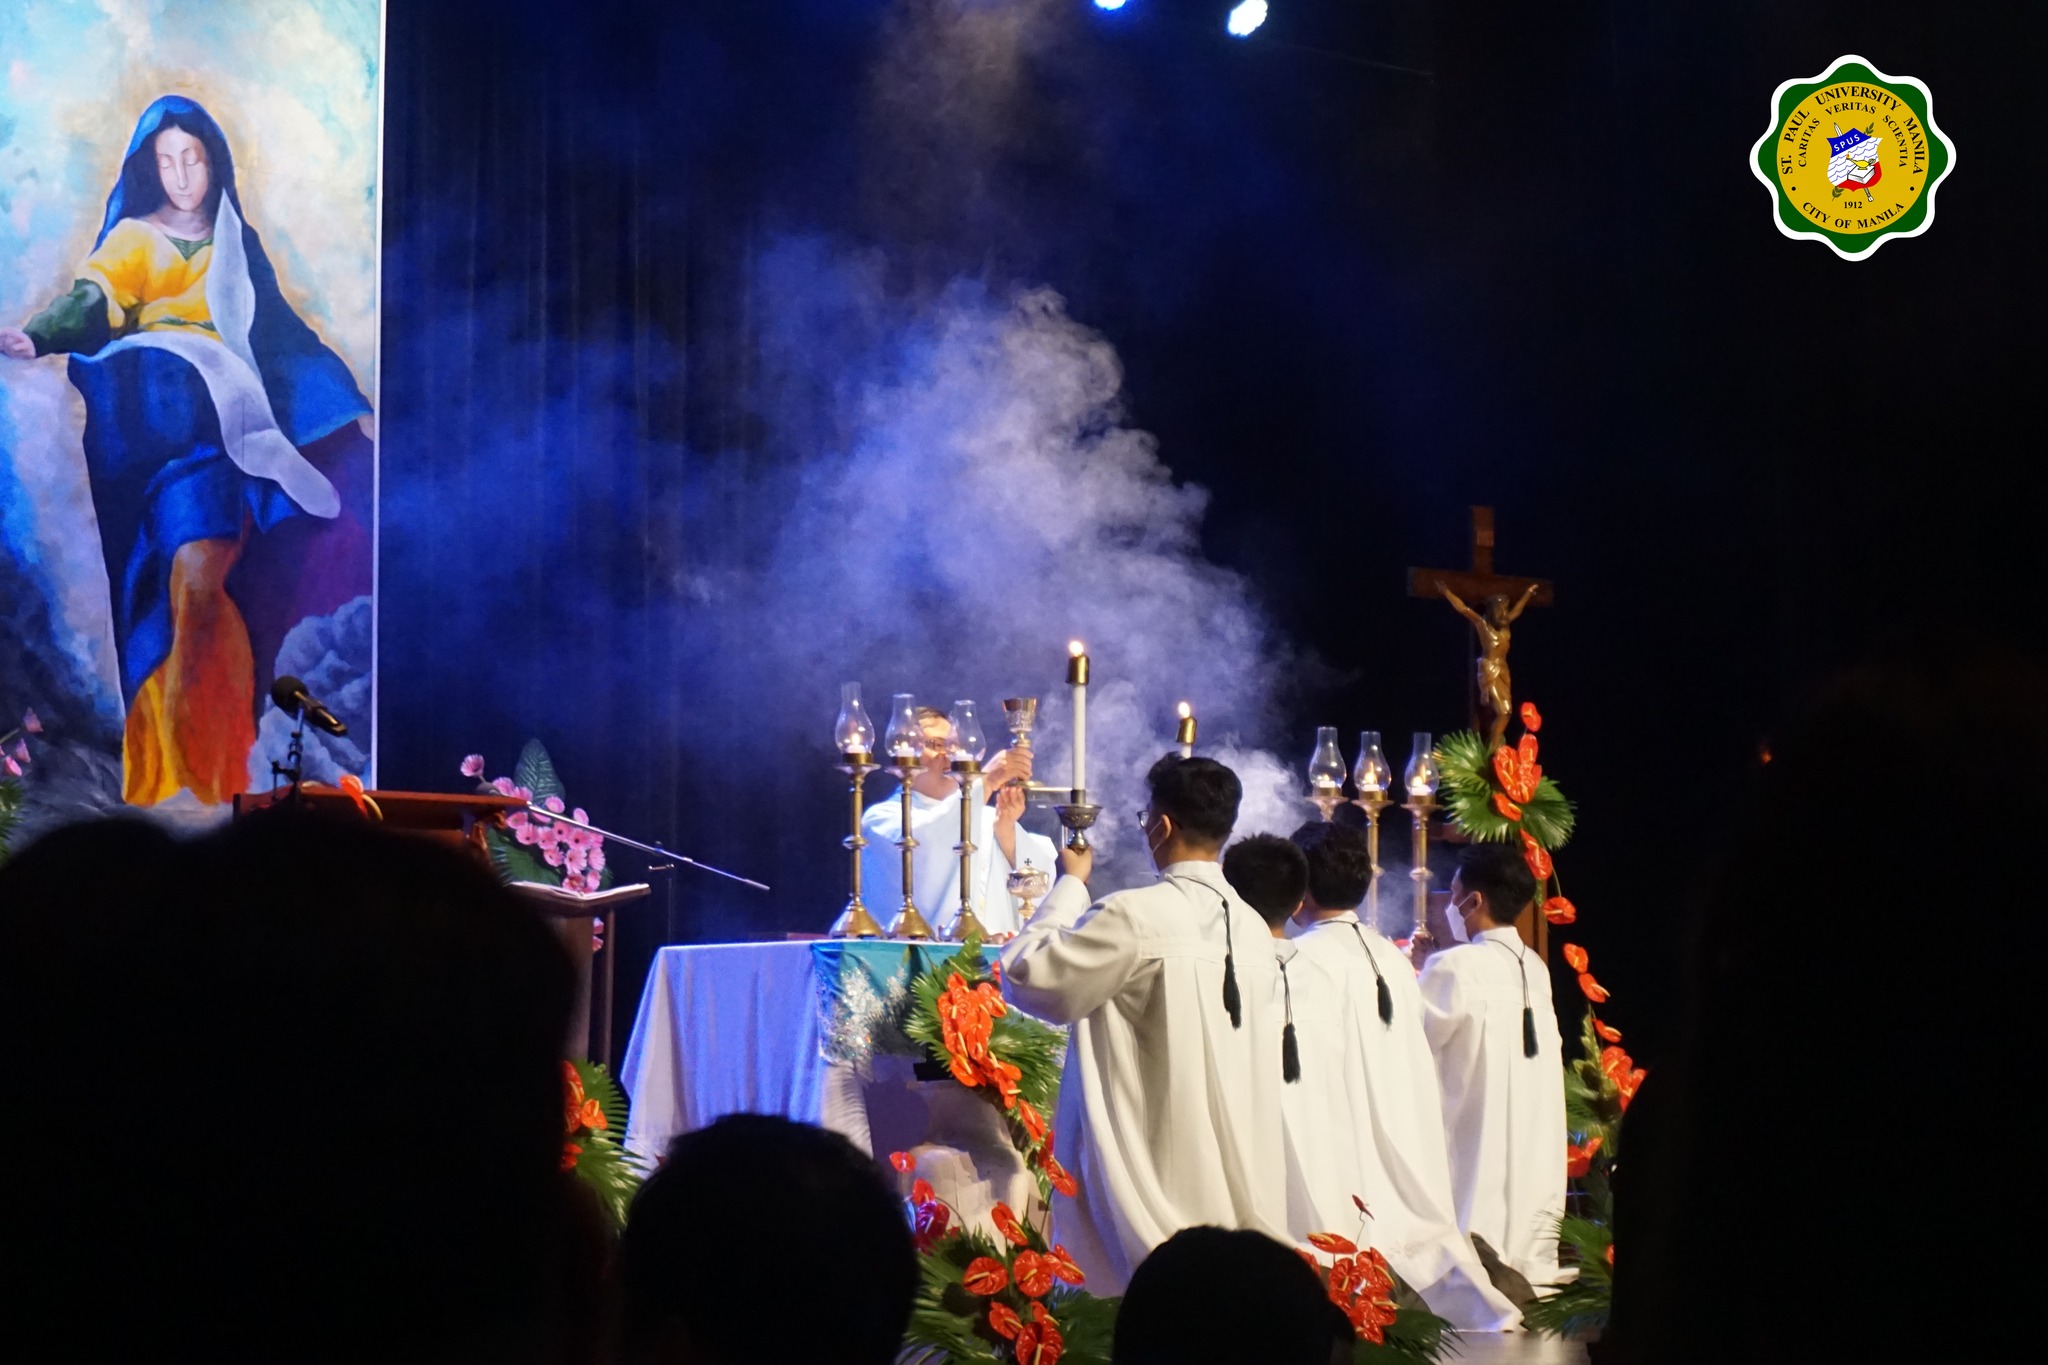 Holy Spirit Mass at the FDL Auditorium